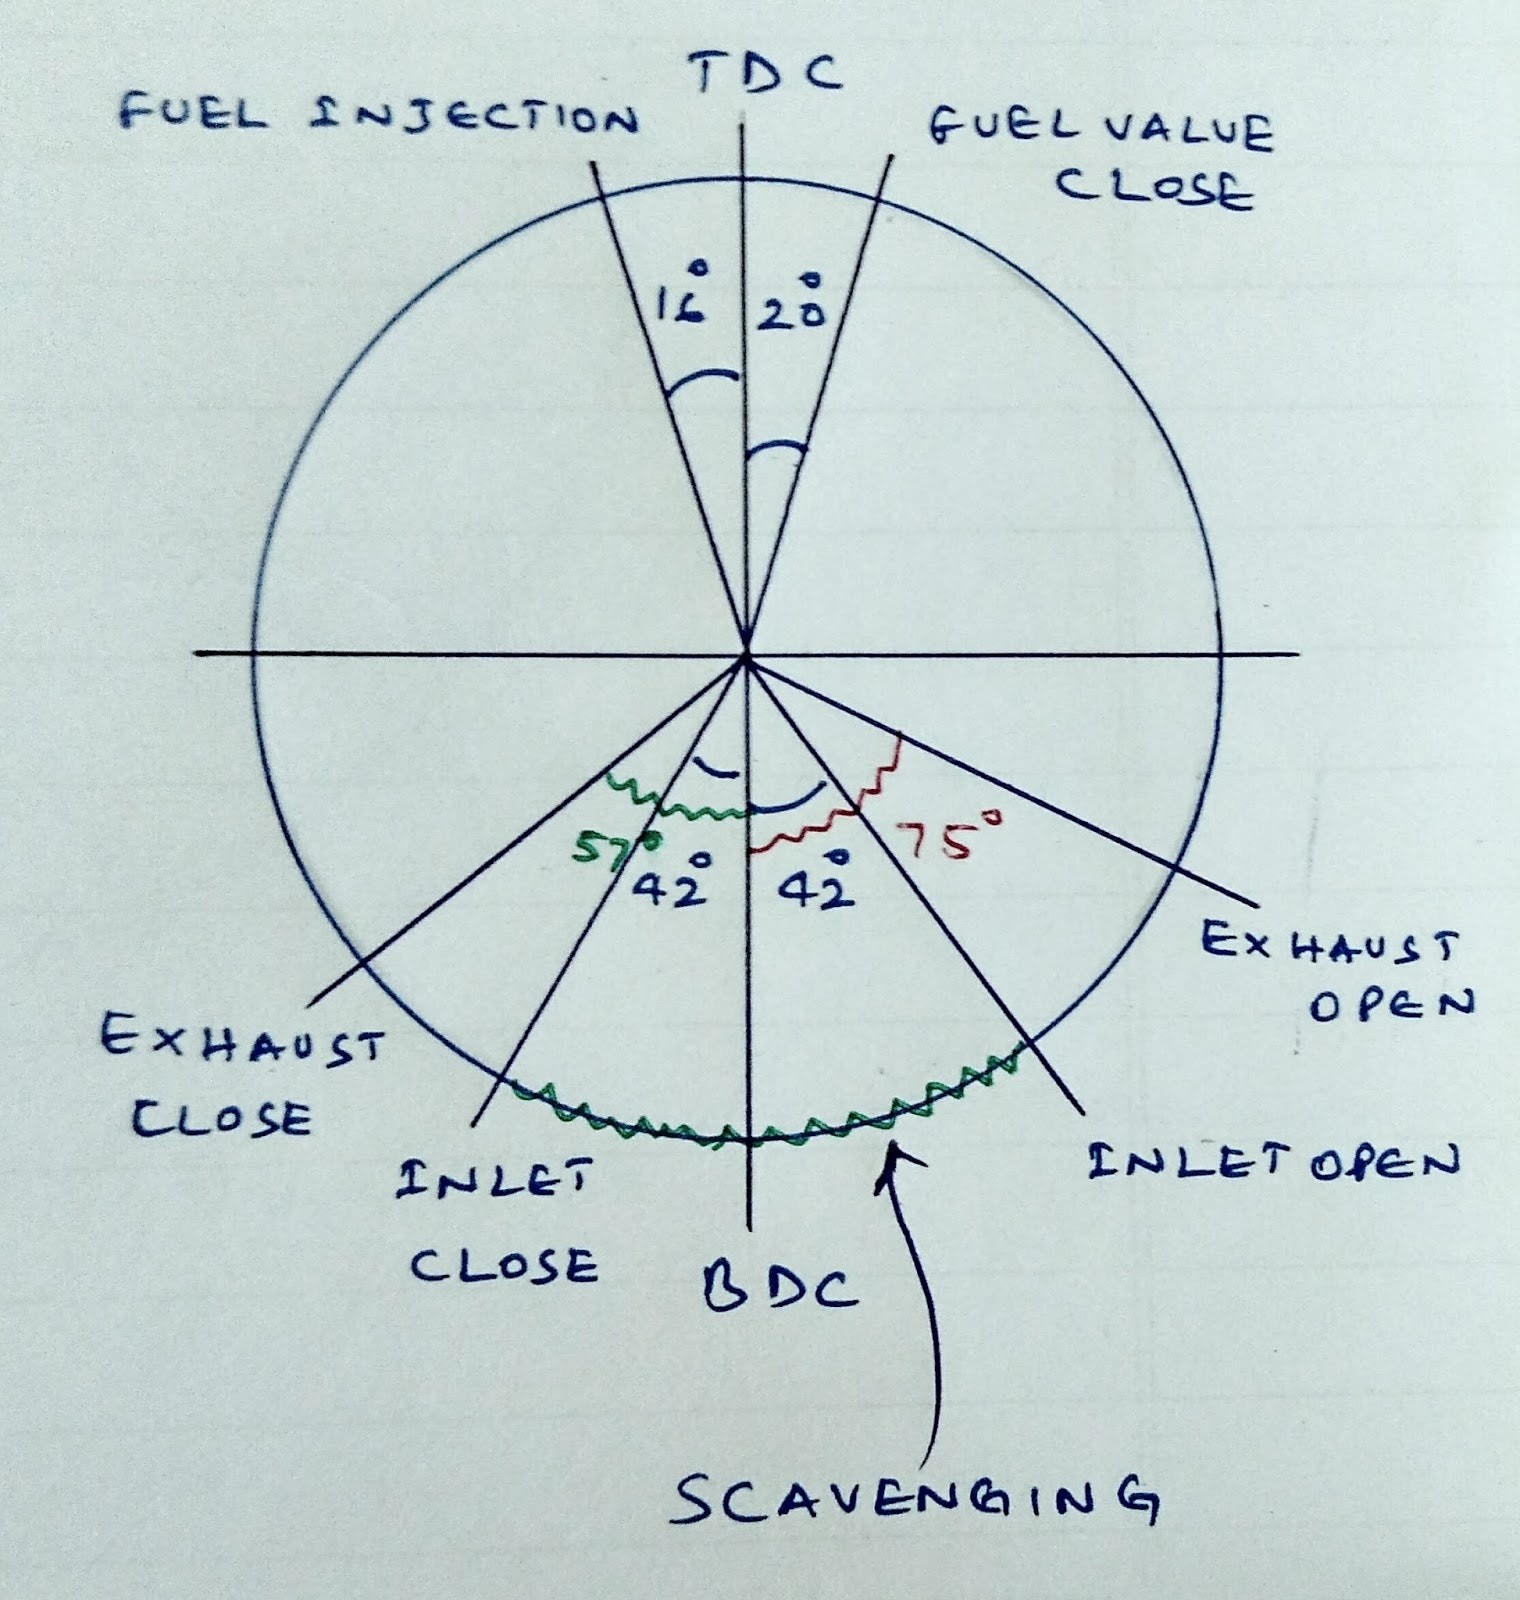 Valve Timing Diagram Of Ic Engine Valve Timing Diagram for Petrol Engine Valve Timing Diagram for Of Valve Timing Diagram Of Ic Engine